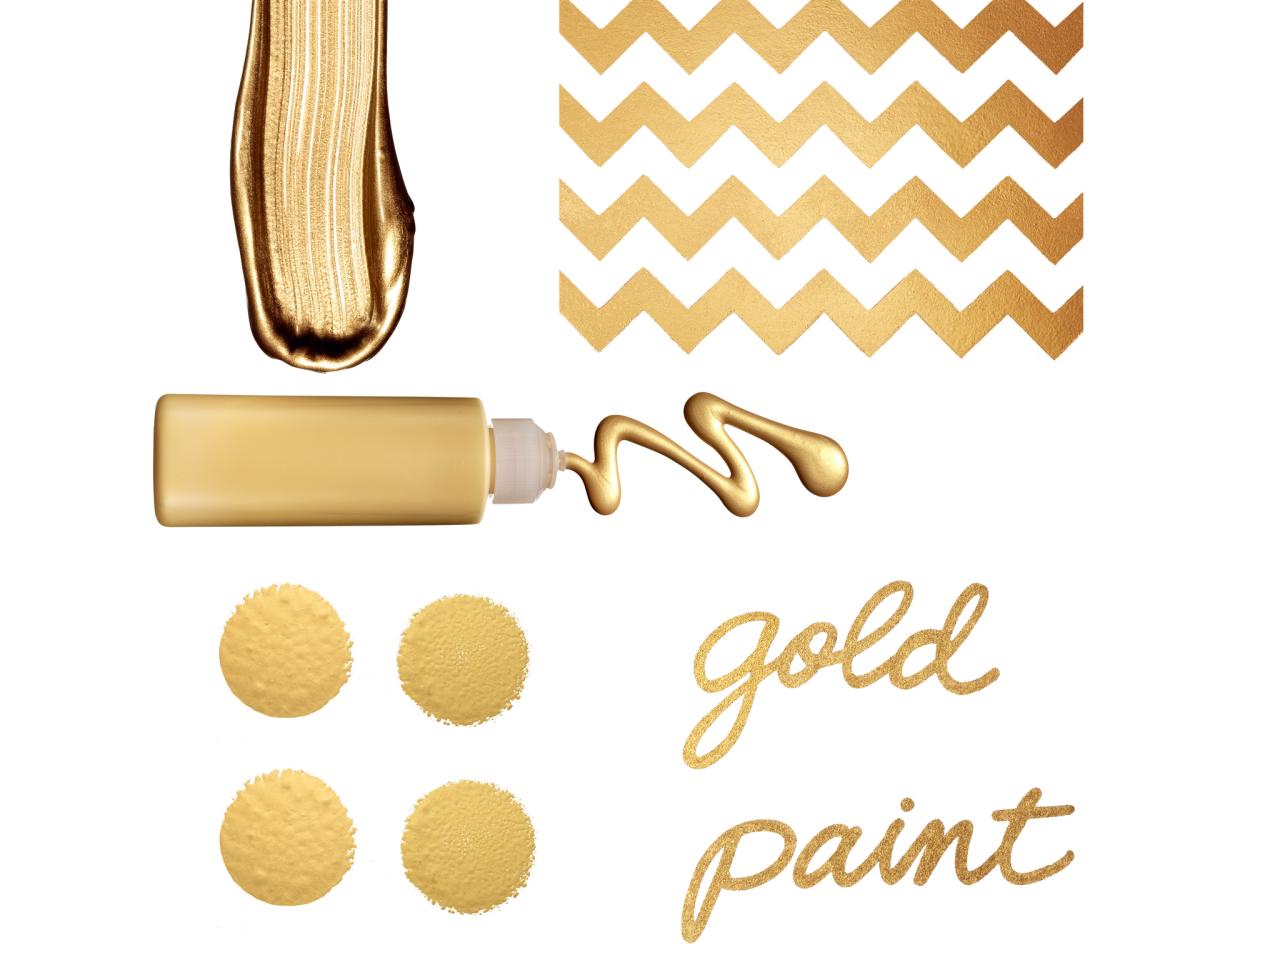 6 Best Ever DIYs Using Gold Spray Paint